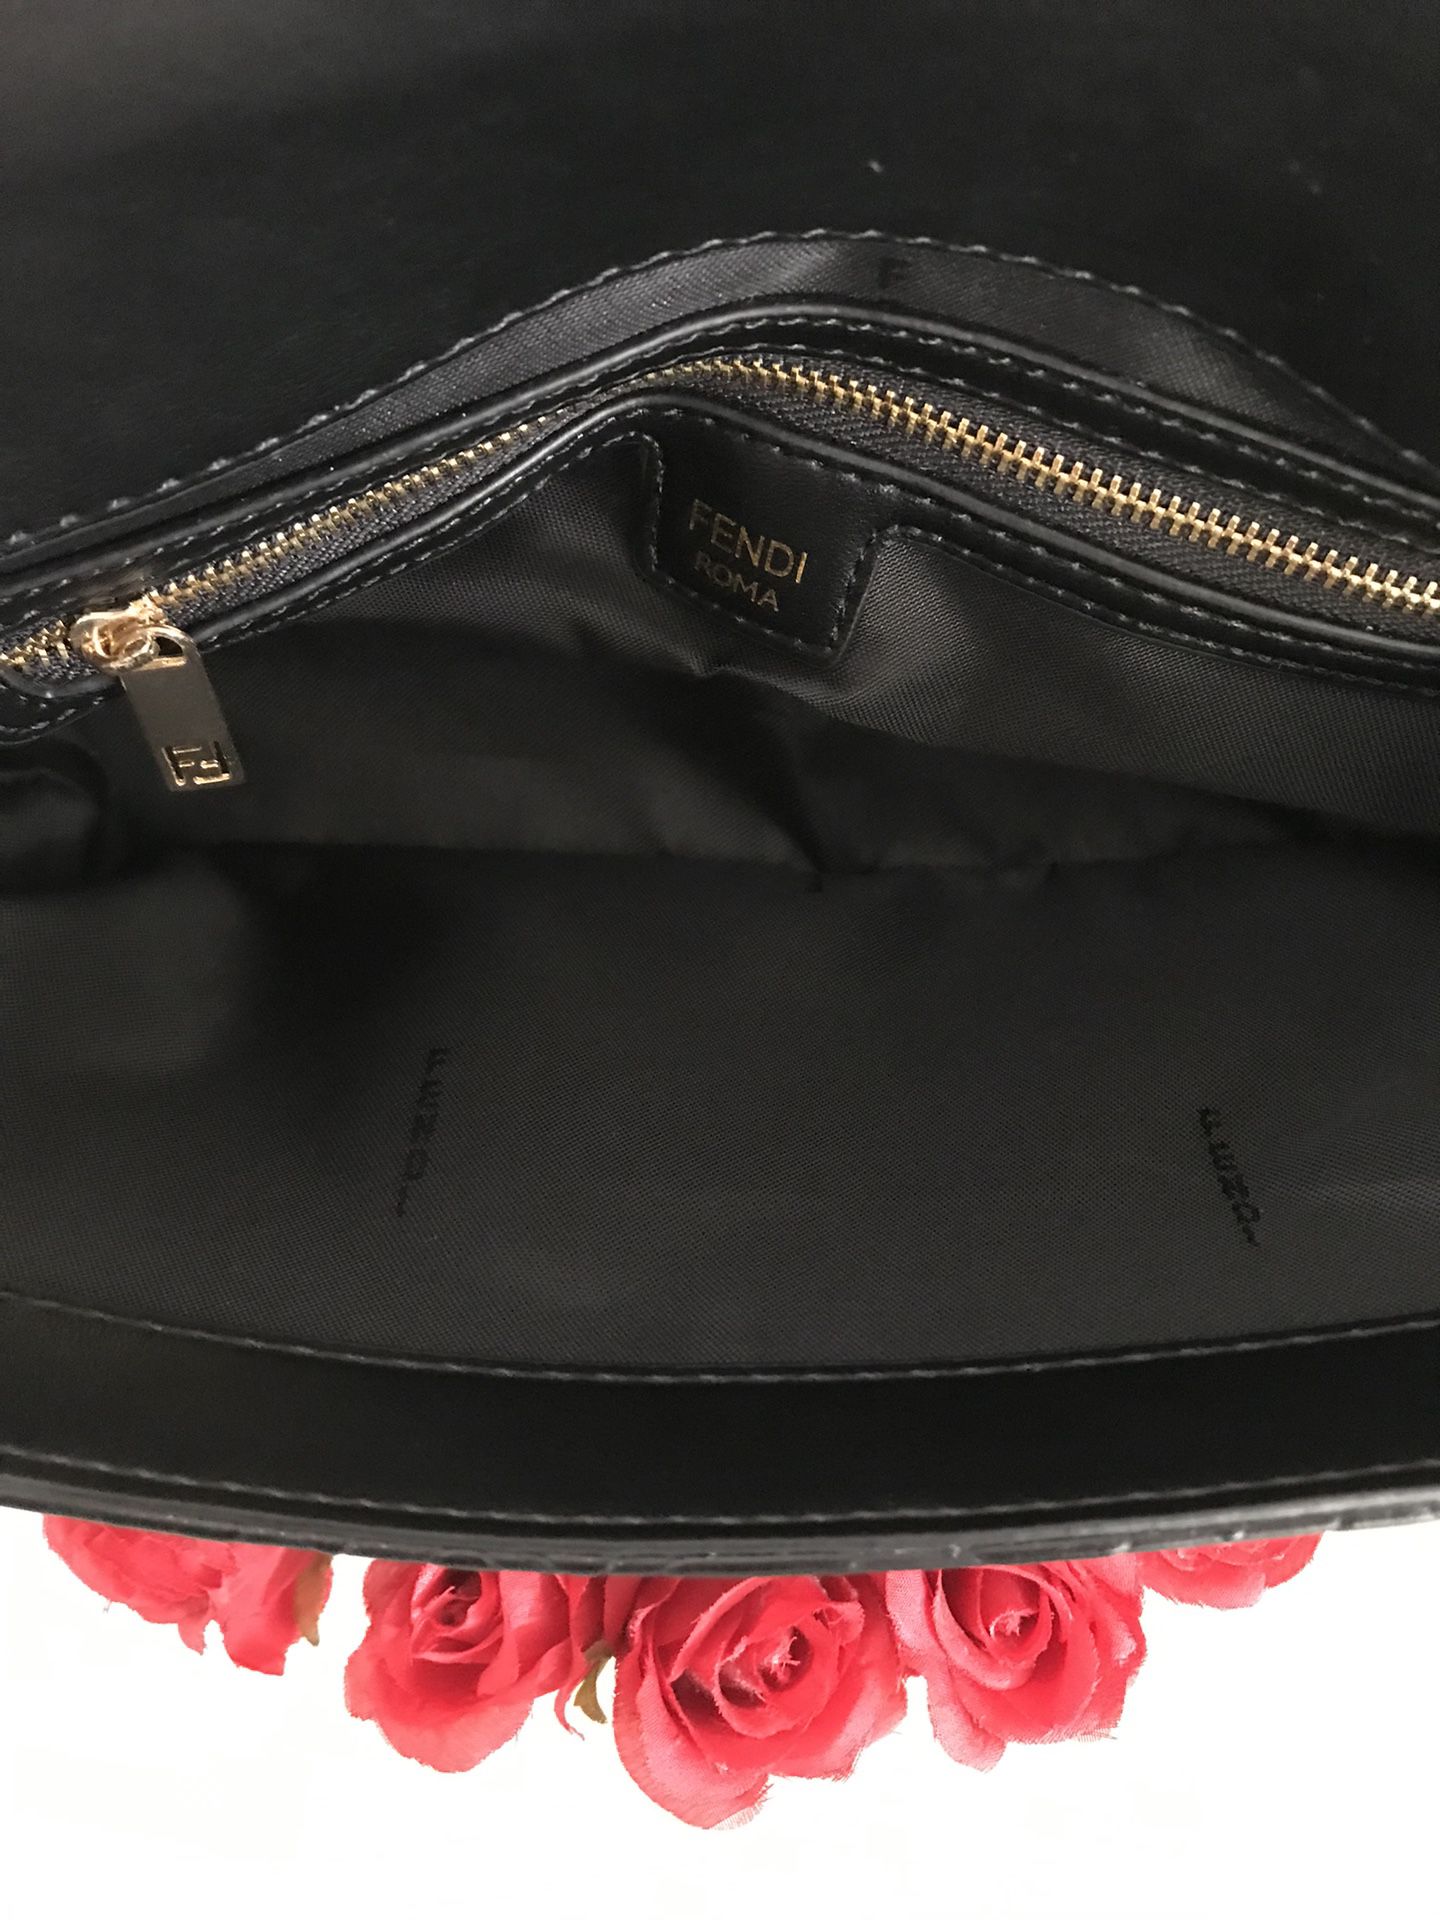 Women's Black Tote Bag Cartera for Sale in Halndle Bch, FL - OfferUp